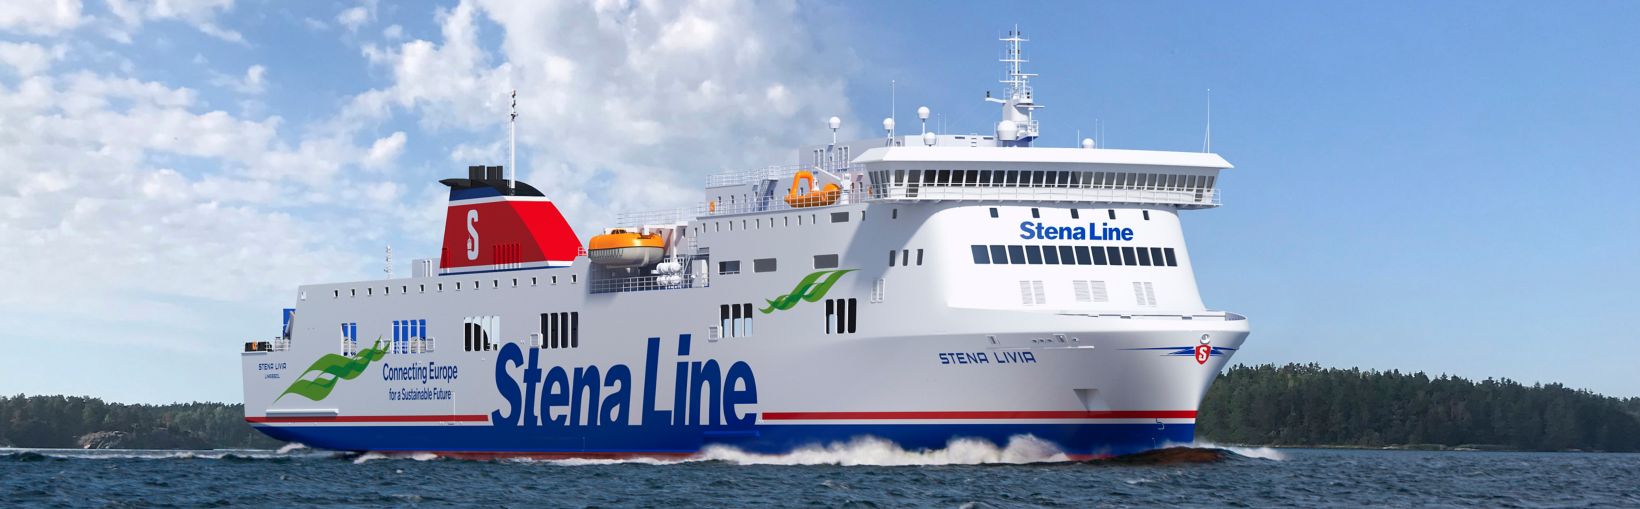 Stena Livia ferry at sea